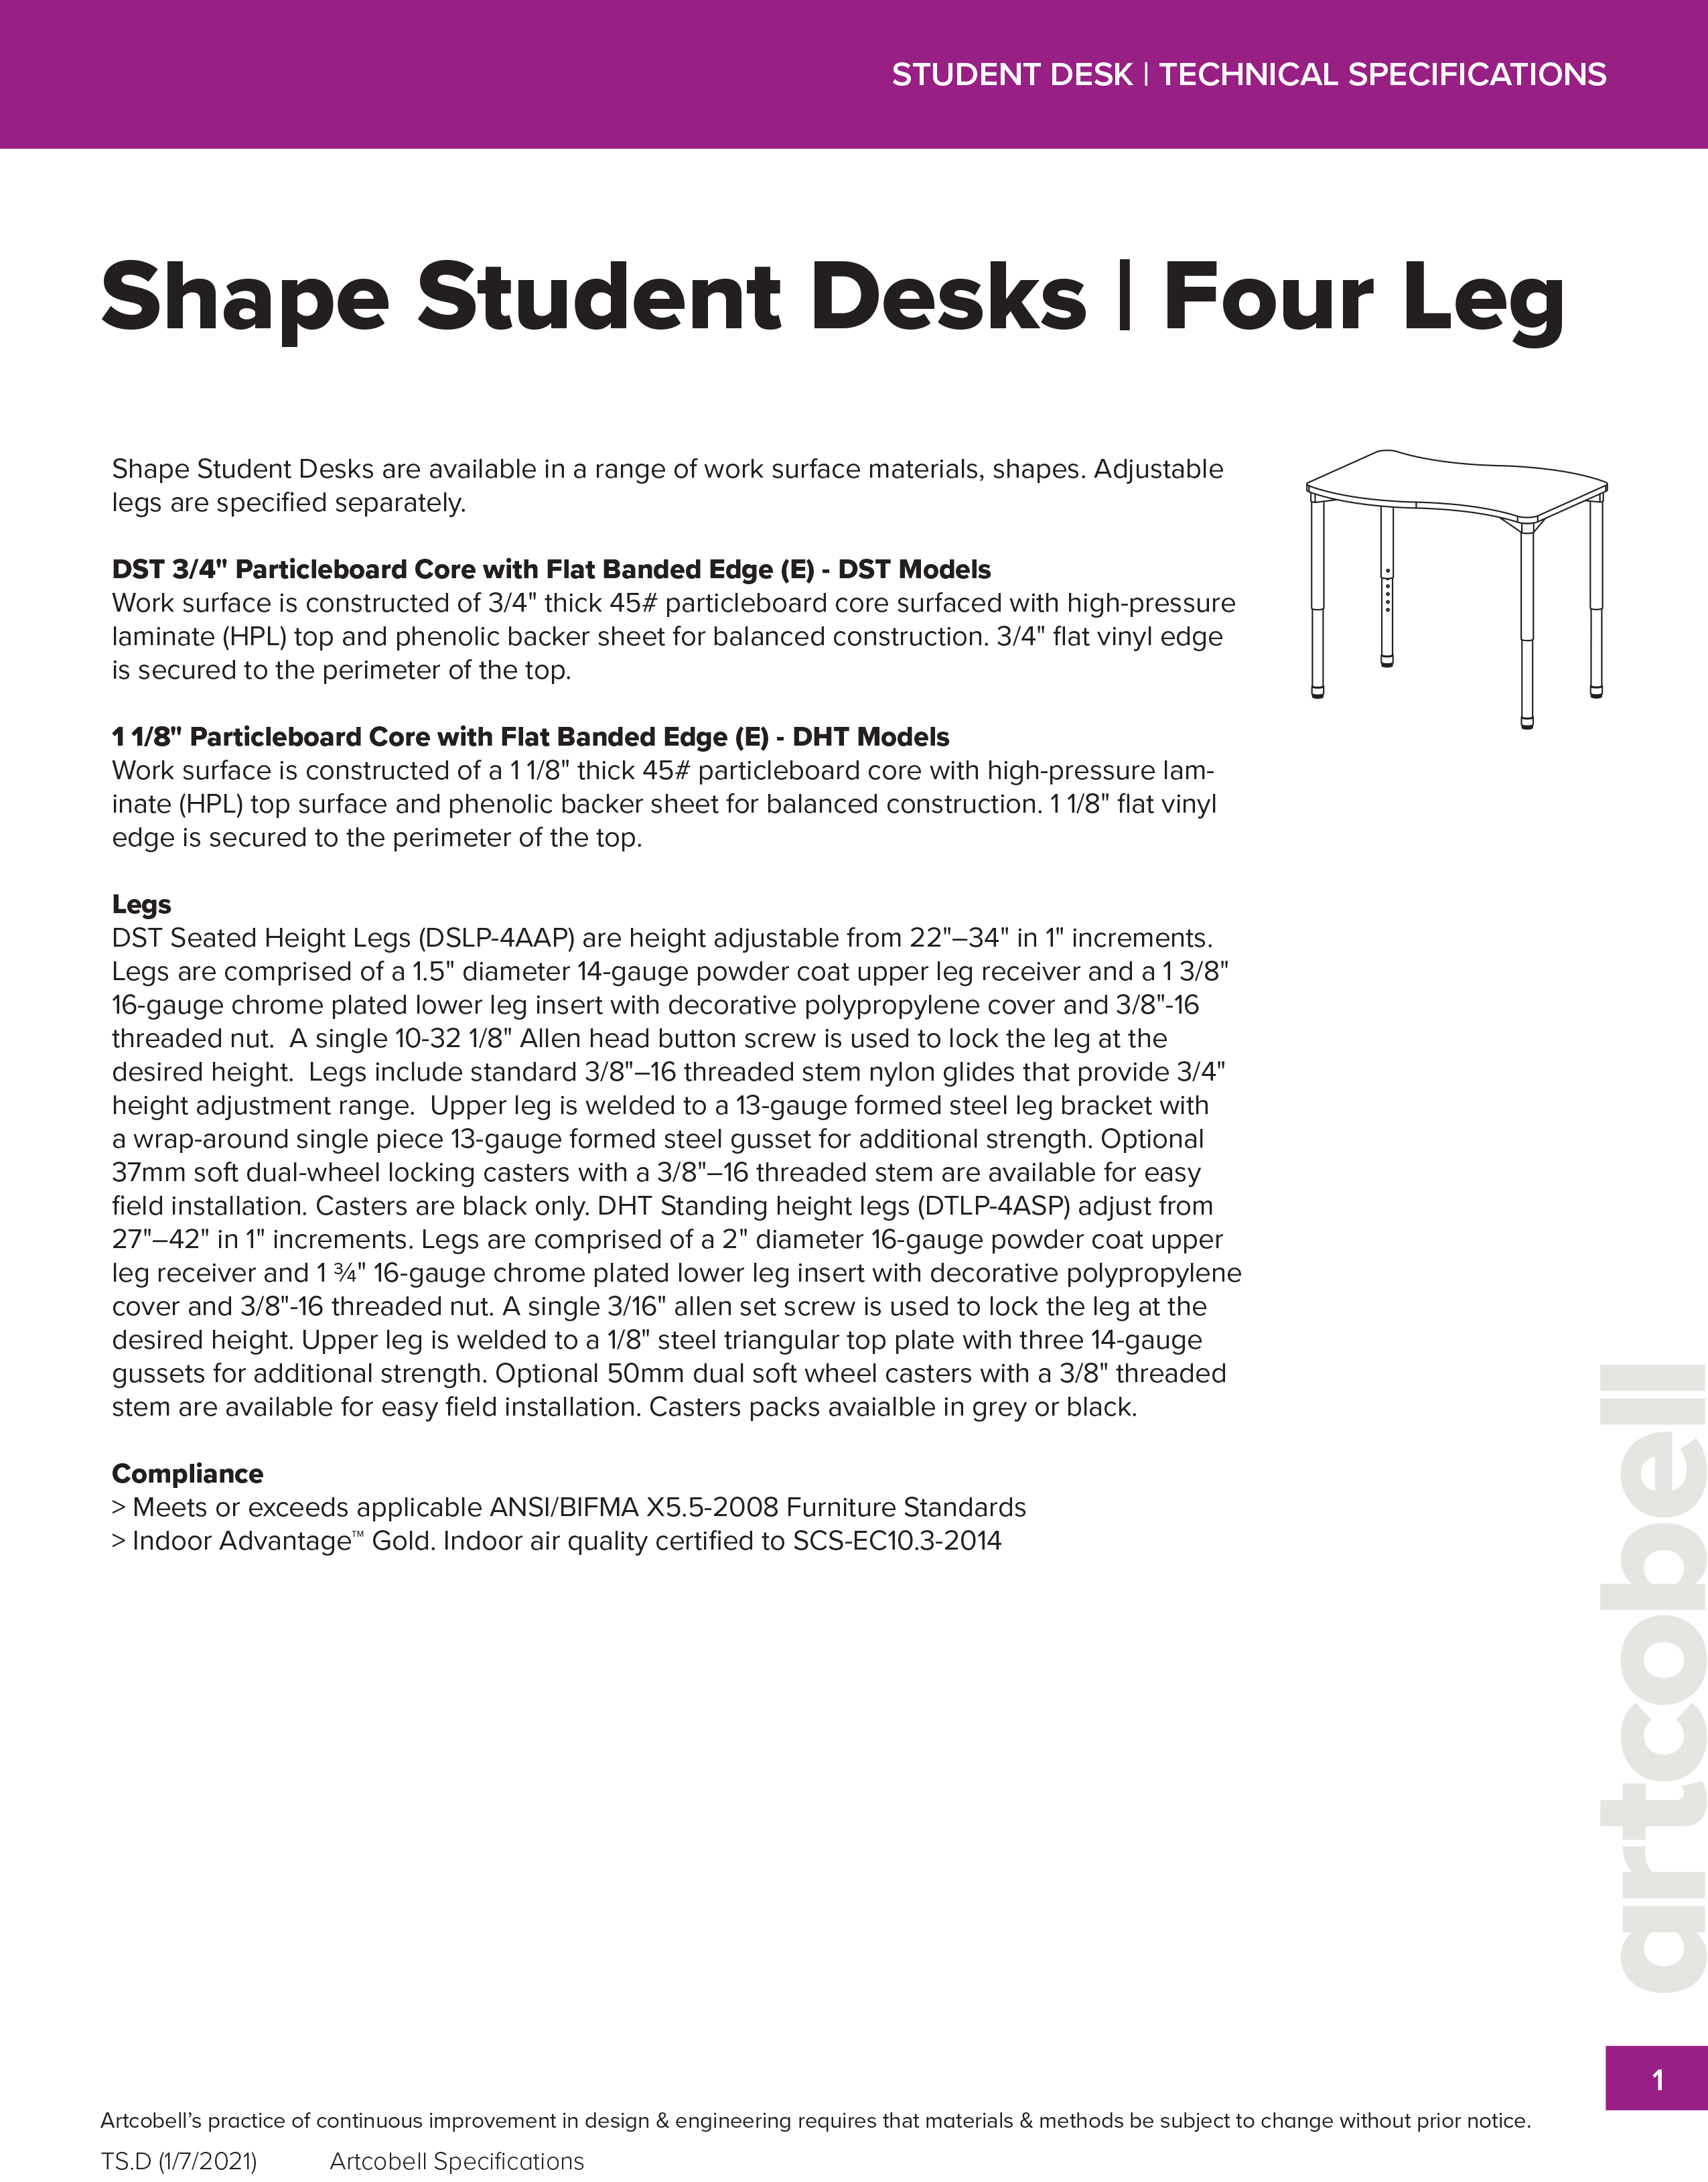 StudentDesksSpecifications_ShapeStudentDesks